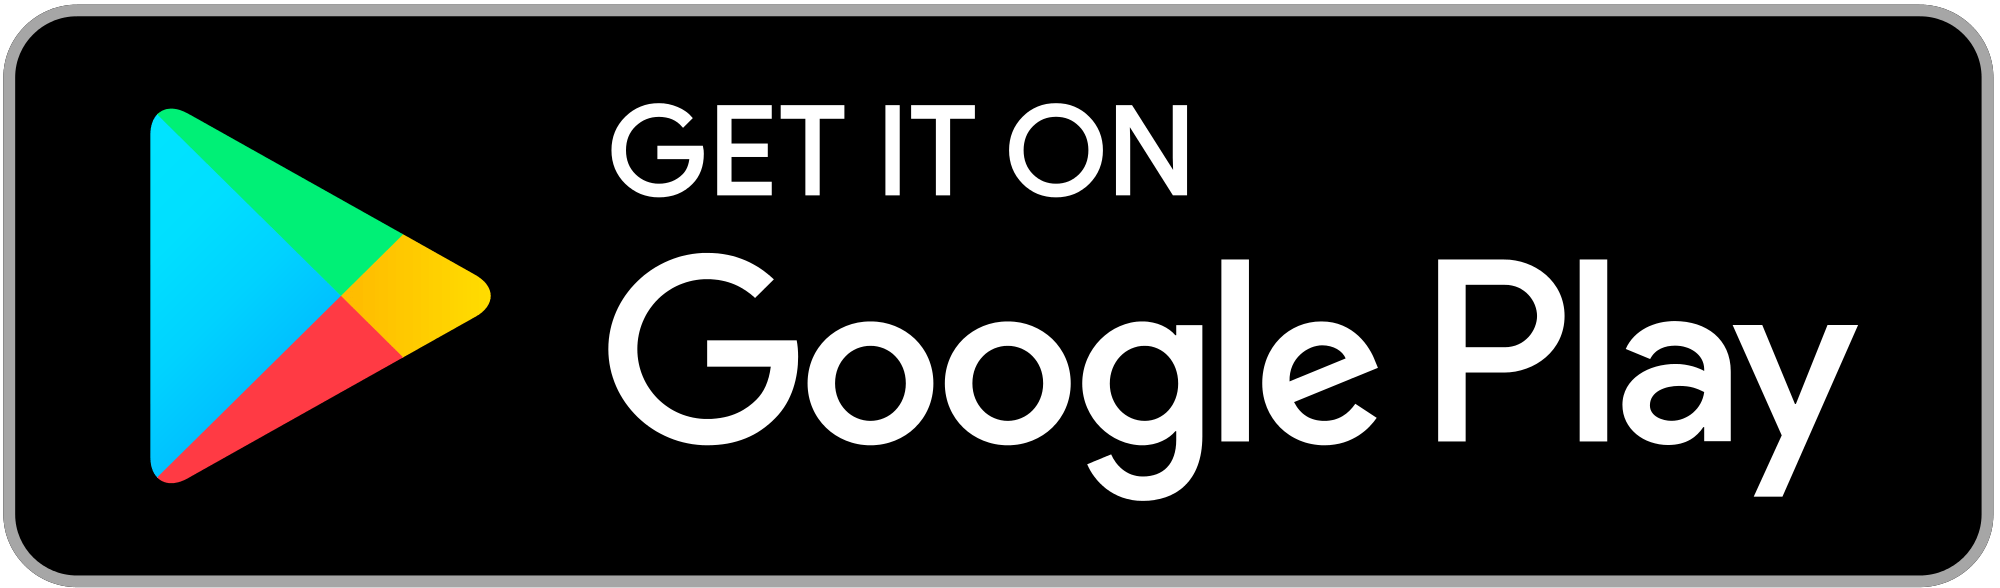 Google App Store Logo - Download Google Play Store Logo